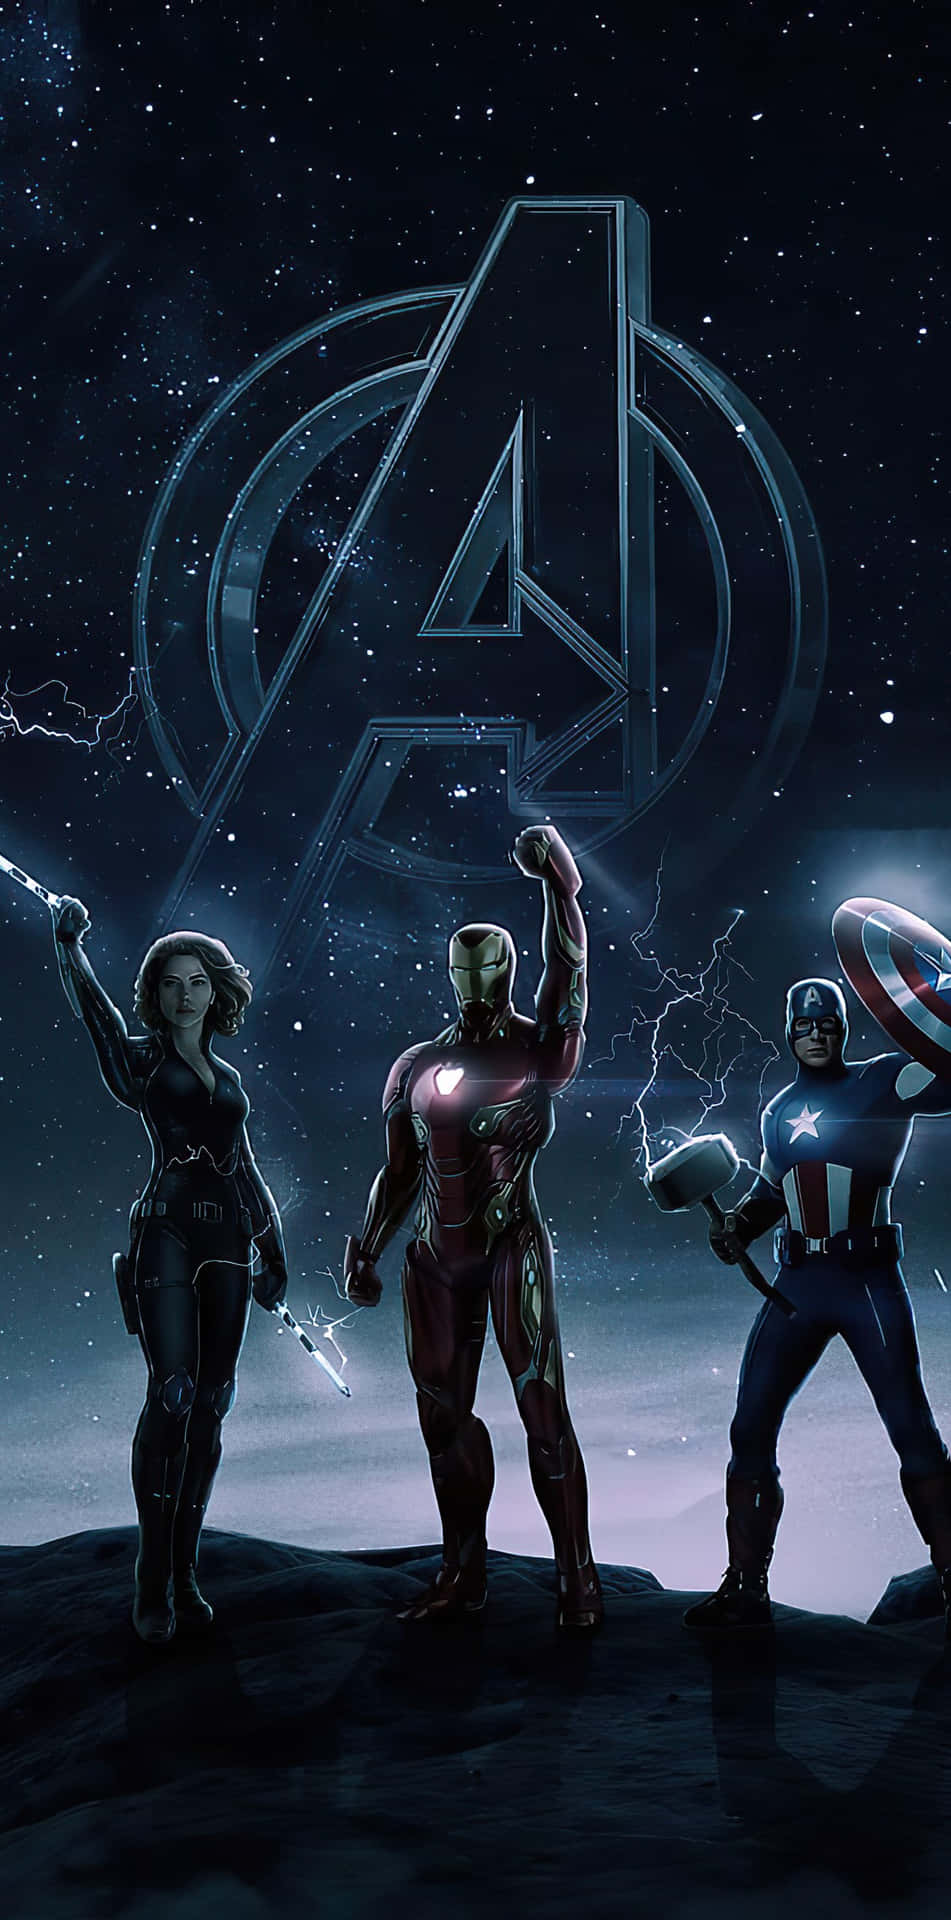 Avengerscharaktere Stehen Vor Einem Sternenklaren Himmel. Wallpaper